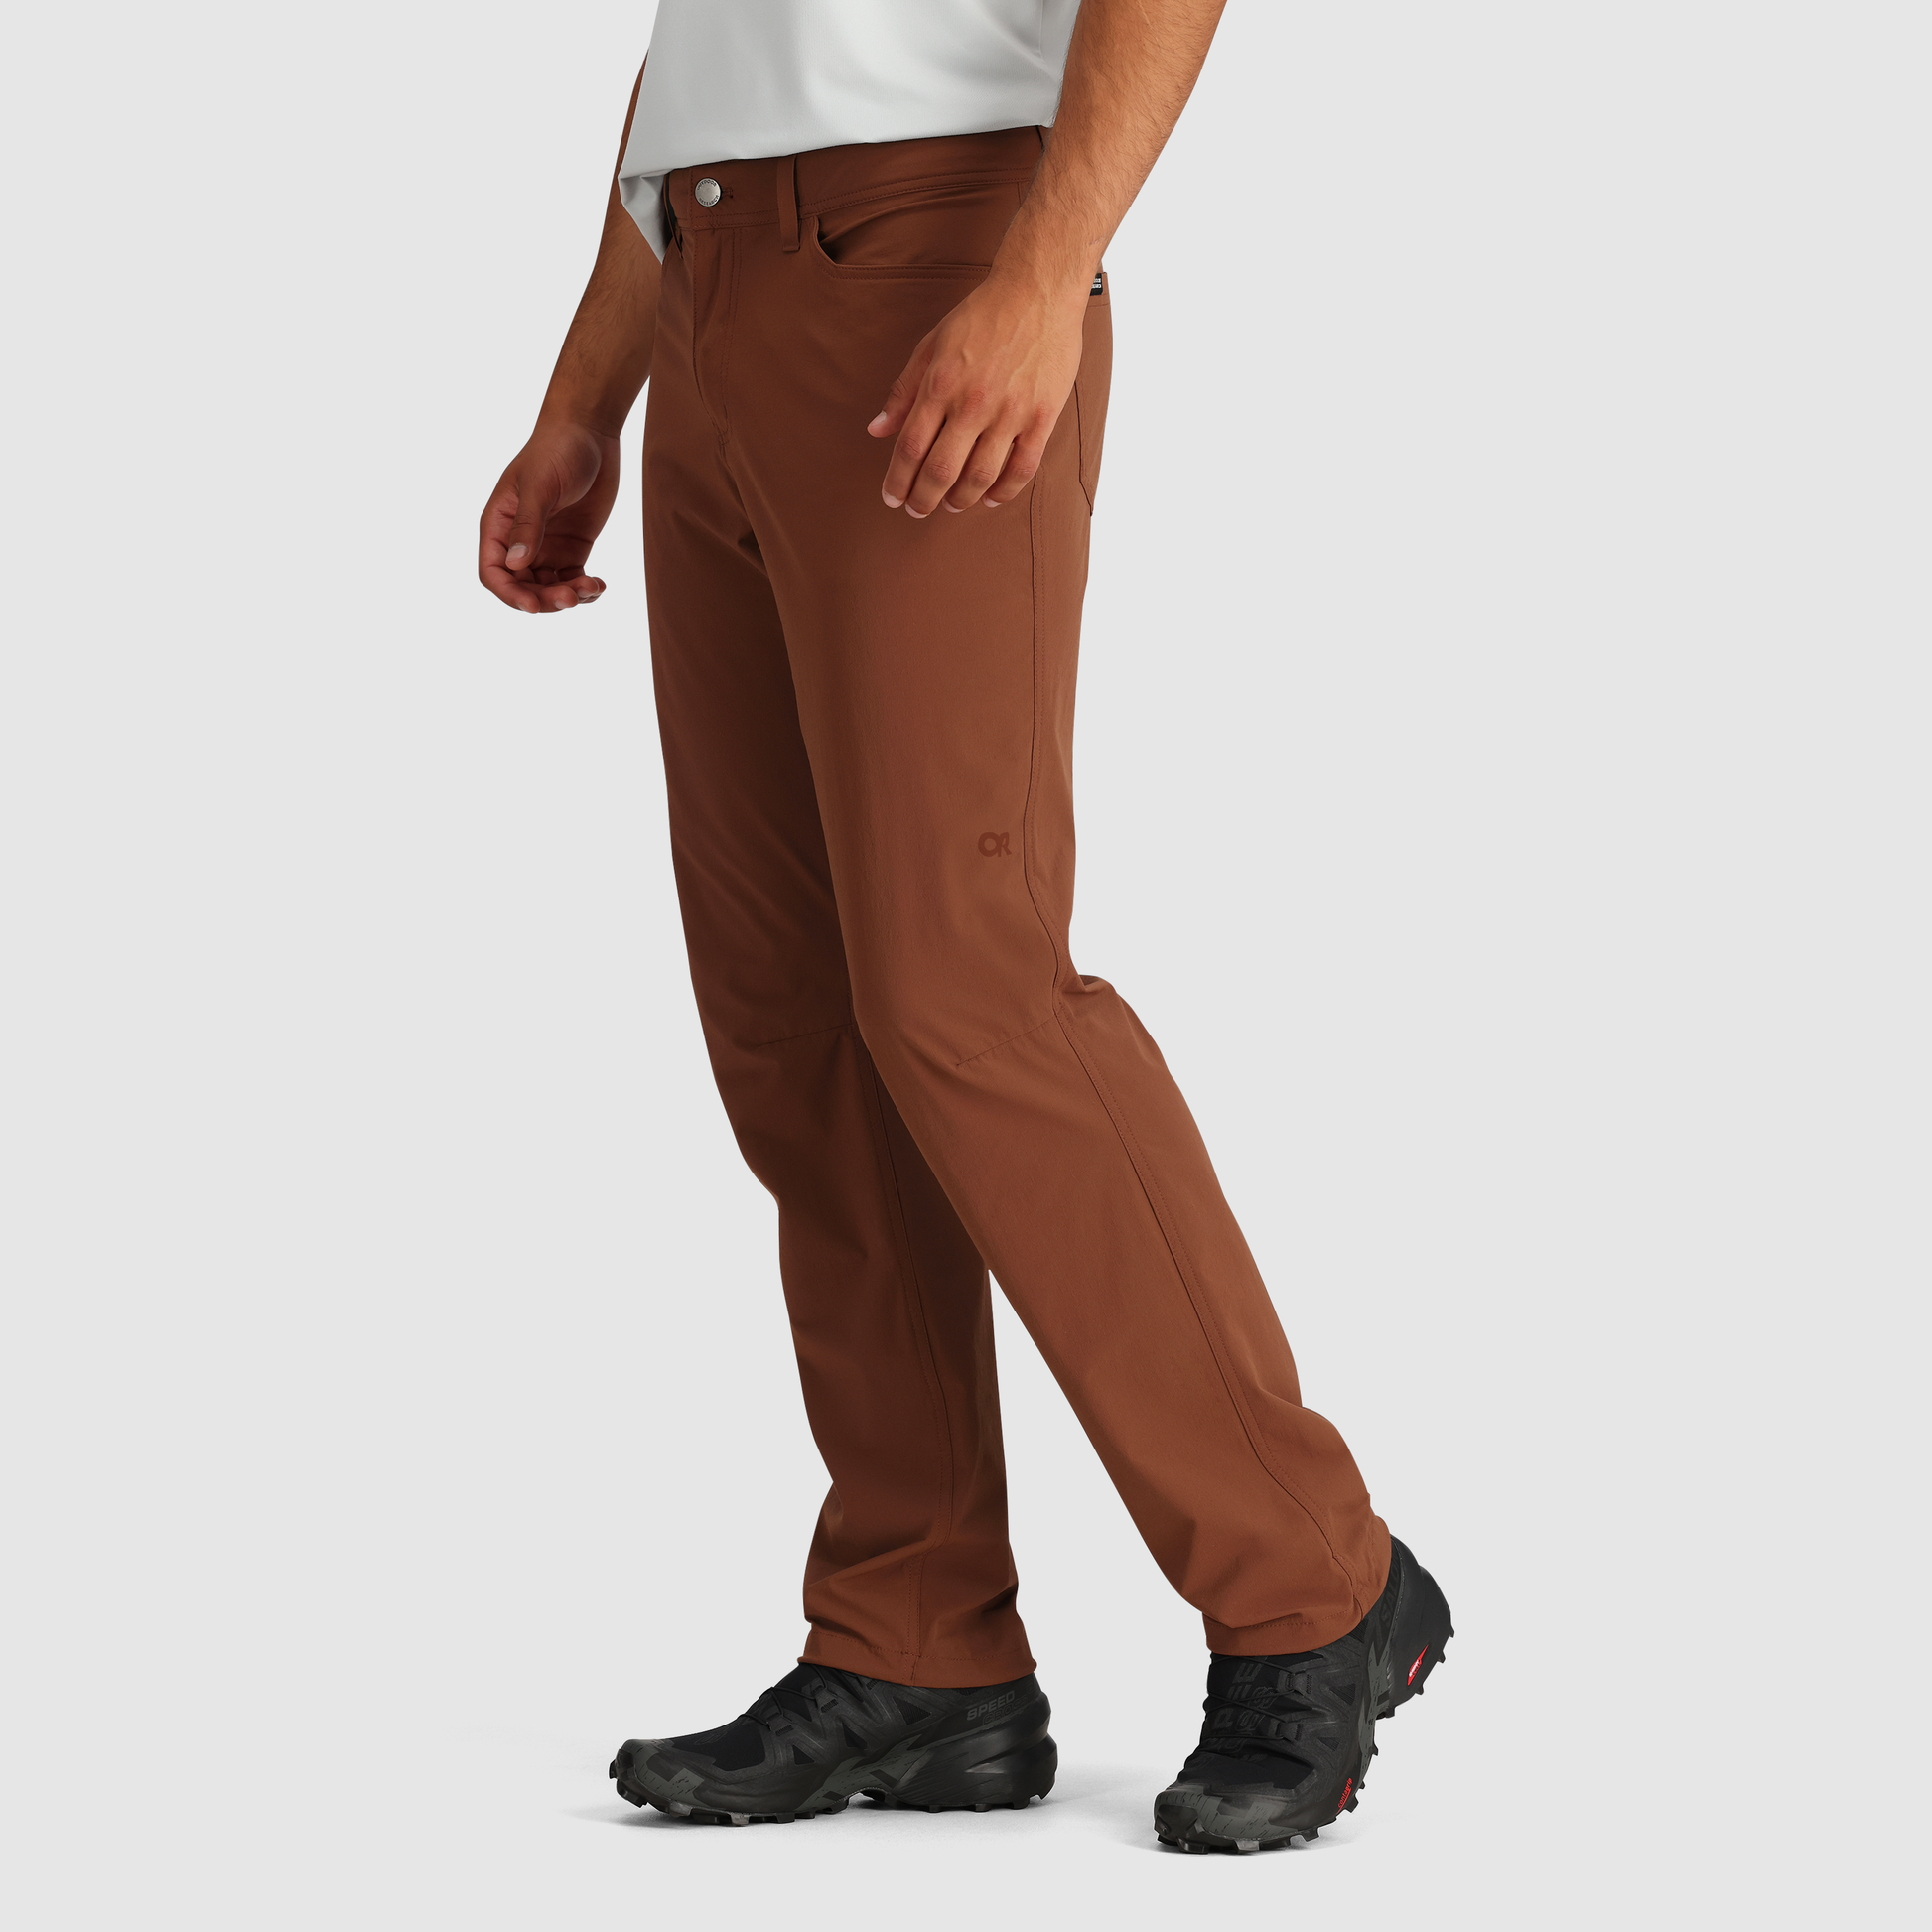 cllios Men's Cargo Pants Plus Size Work Pants Outdoor Hiking Trousers  Comfortable Workout Cargo Pants Multi Pockets 